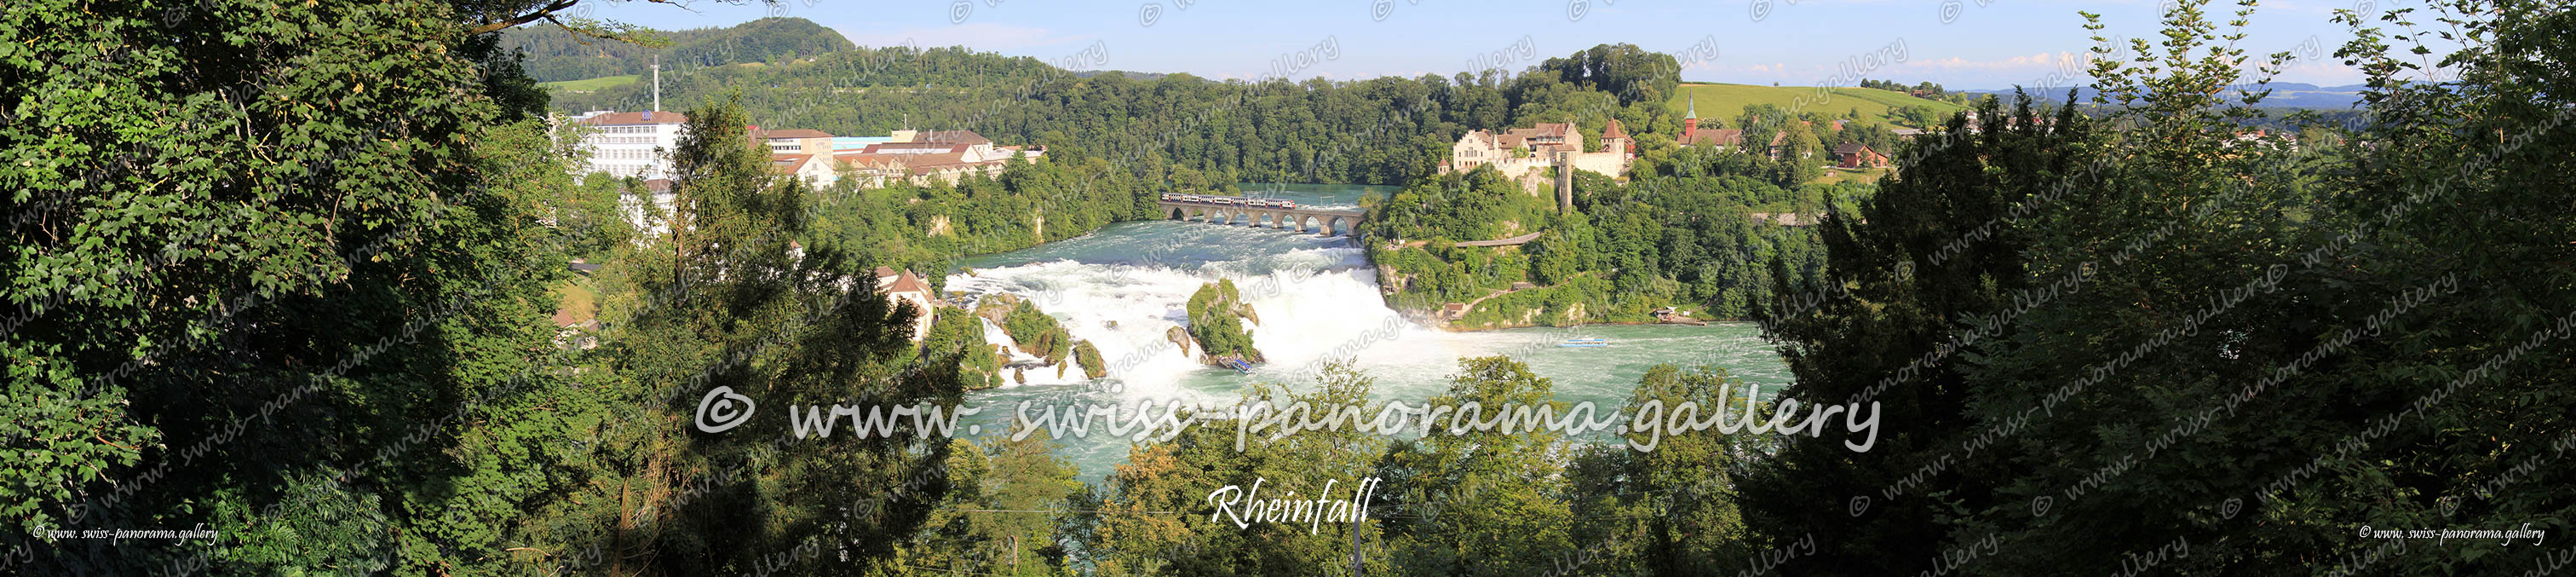 Rheinfall panorama